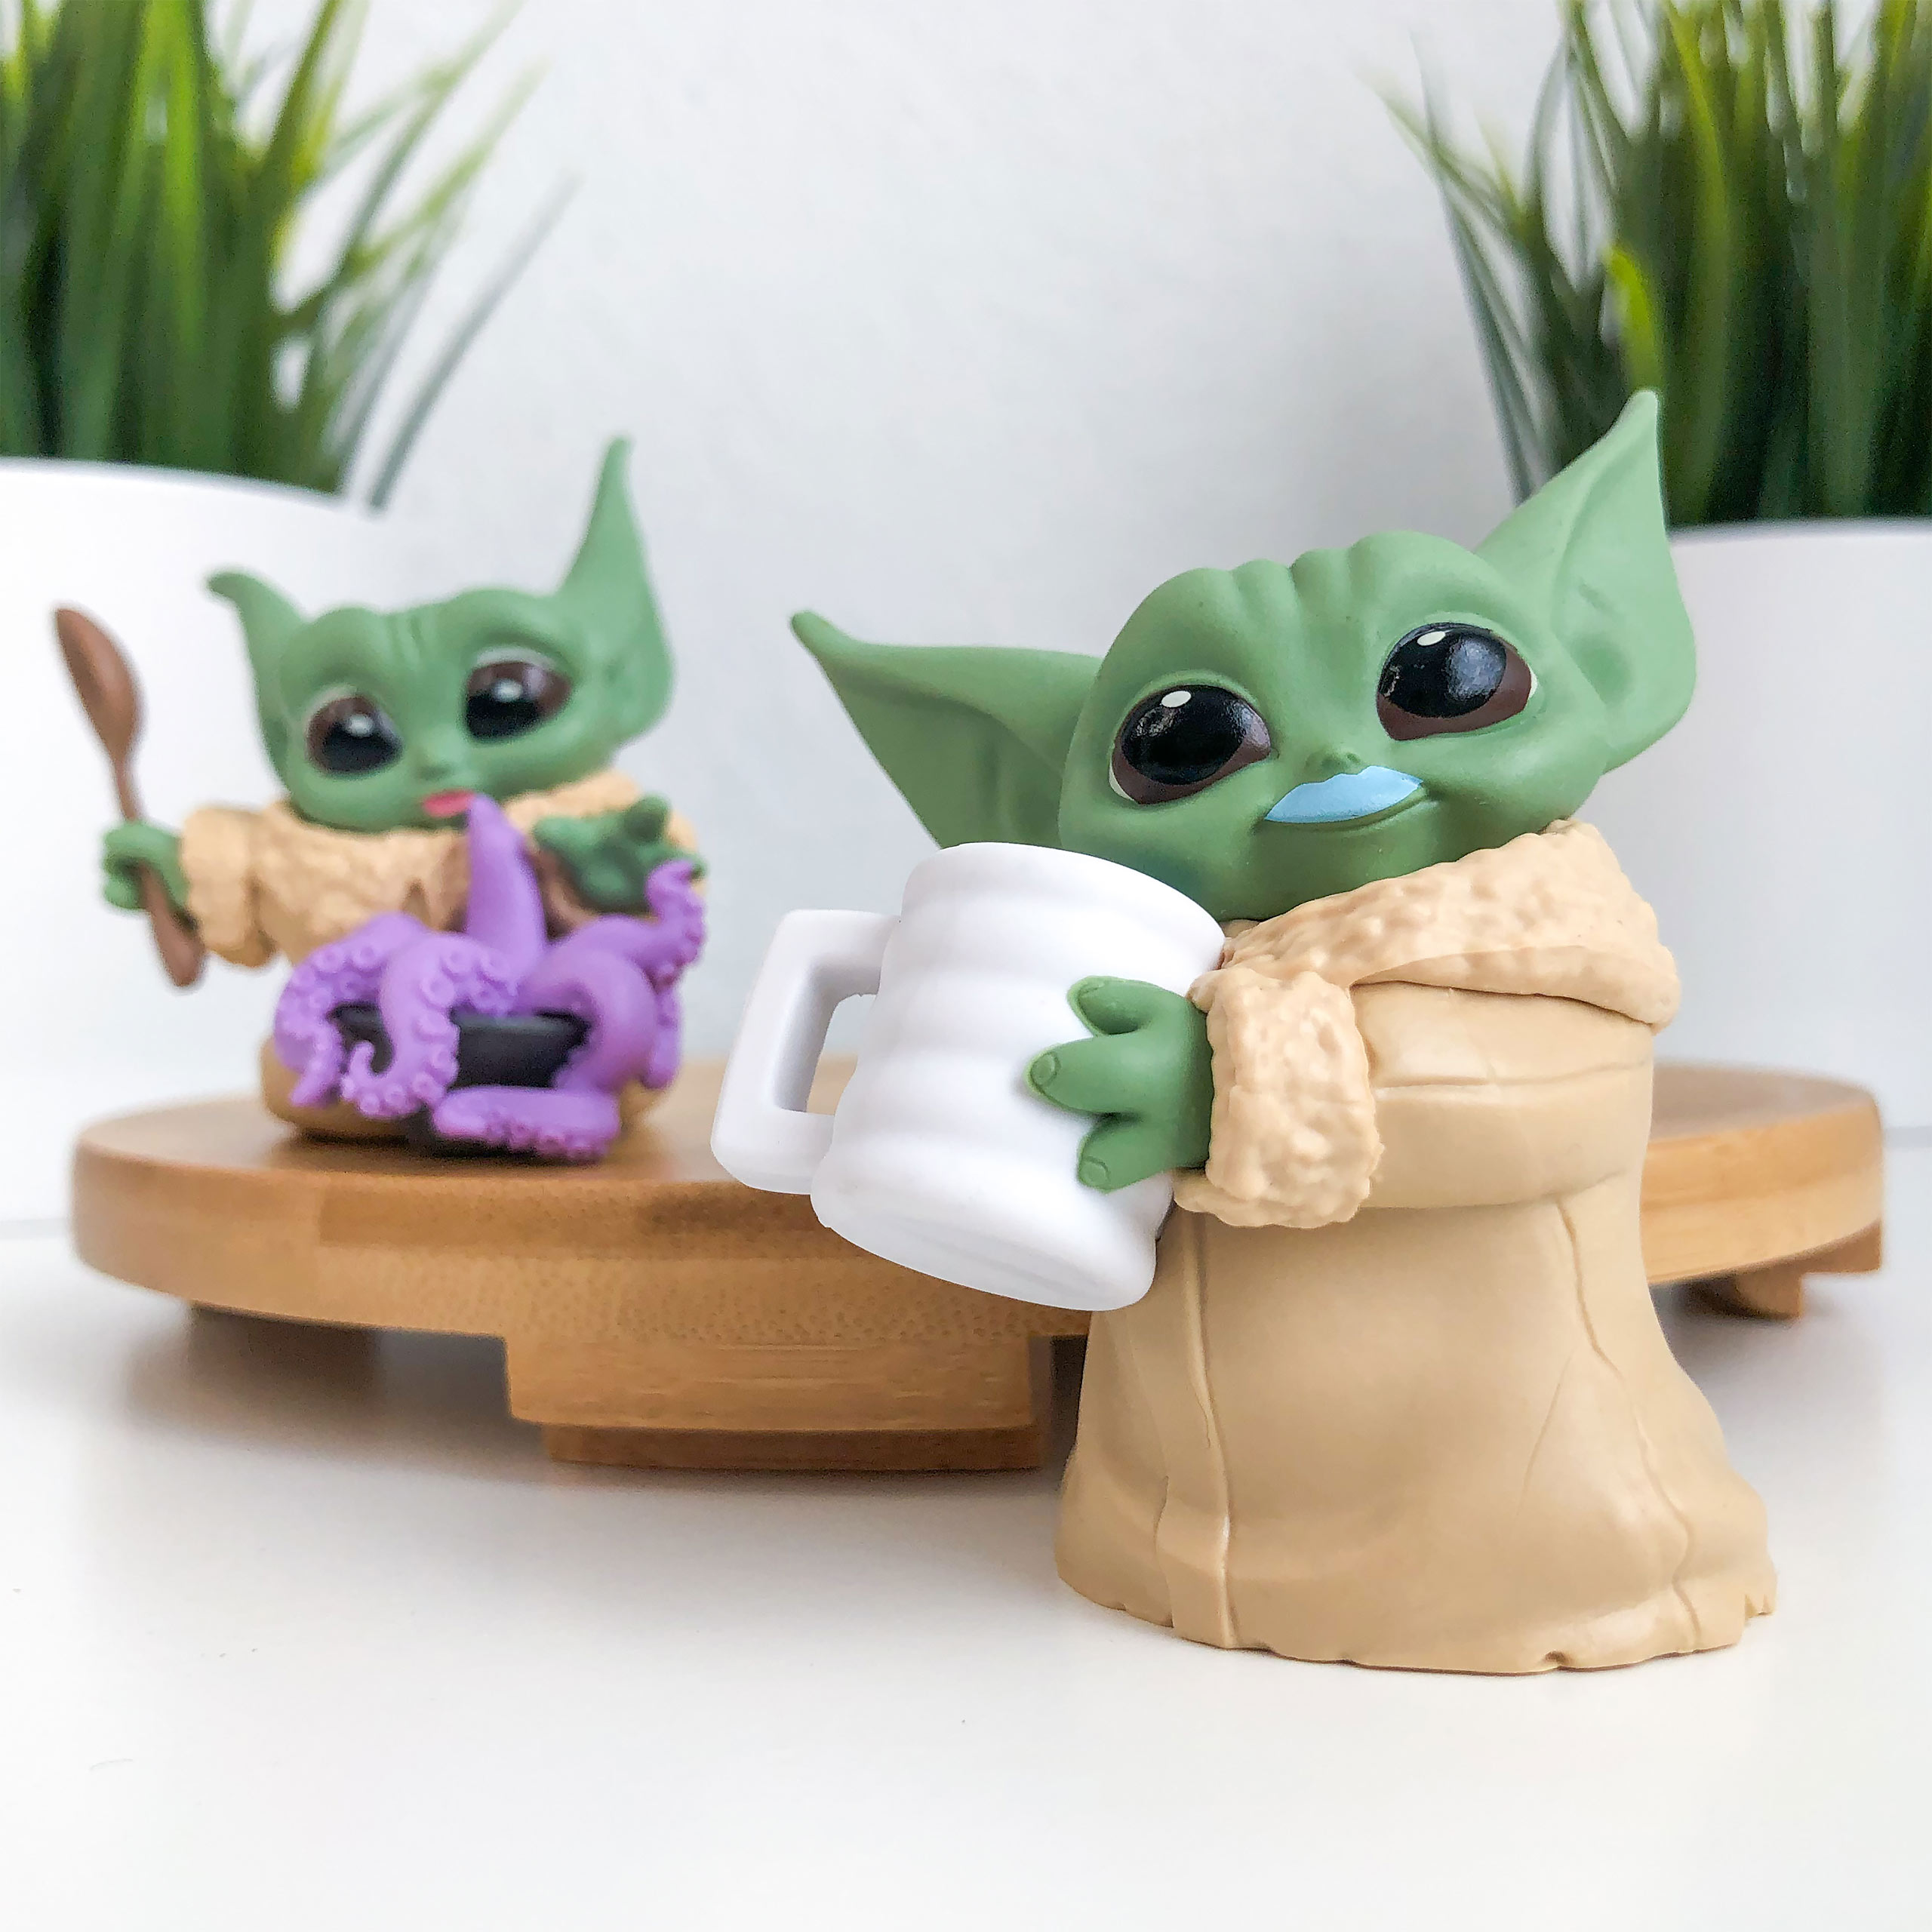 Grogu with Tentacle Soup and Milk Mustache Pose Mini Figure Set - Star Wars The Mandalorian